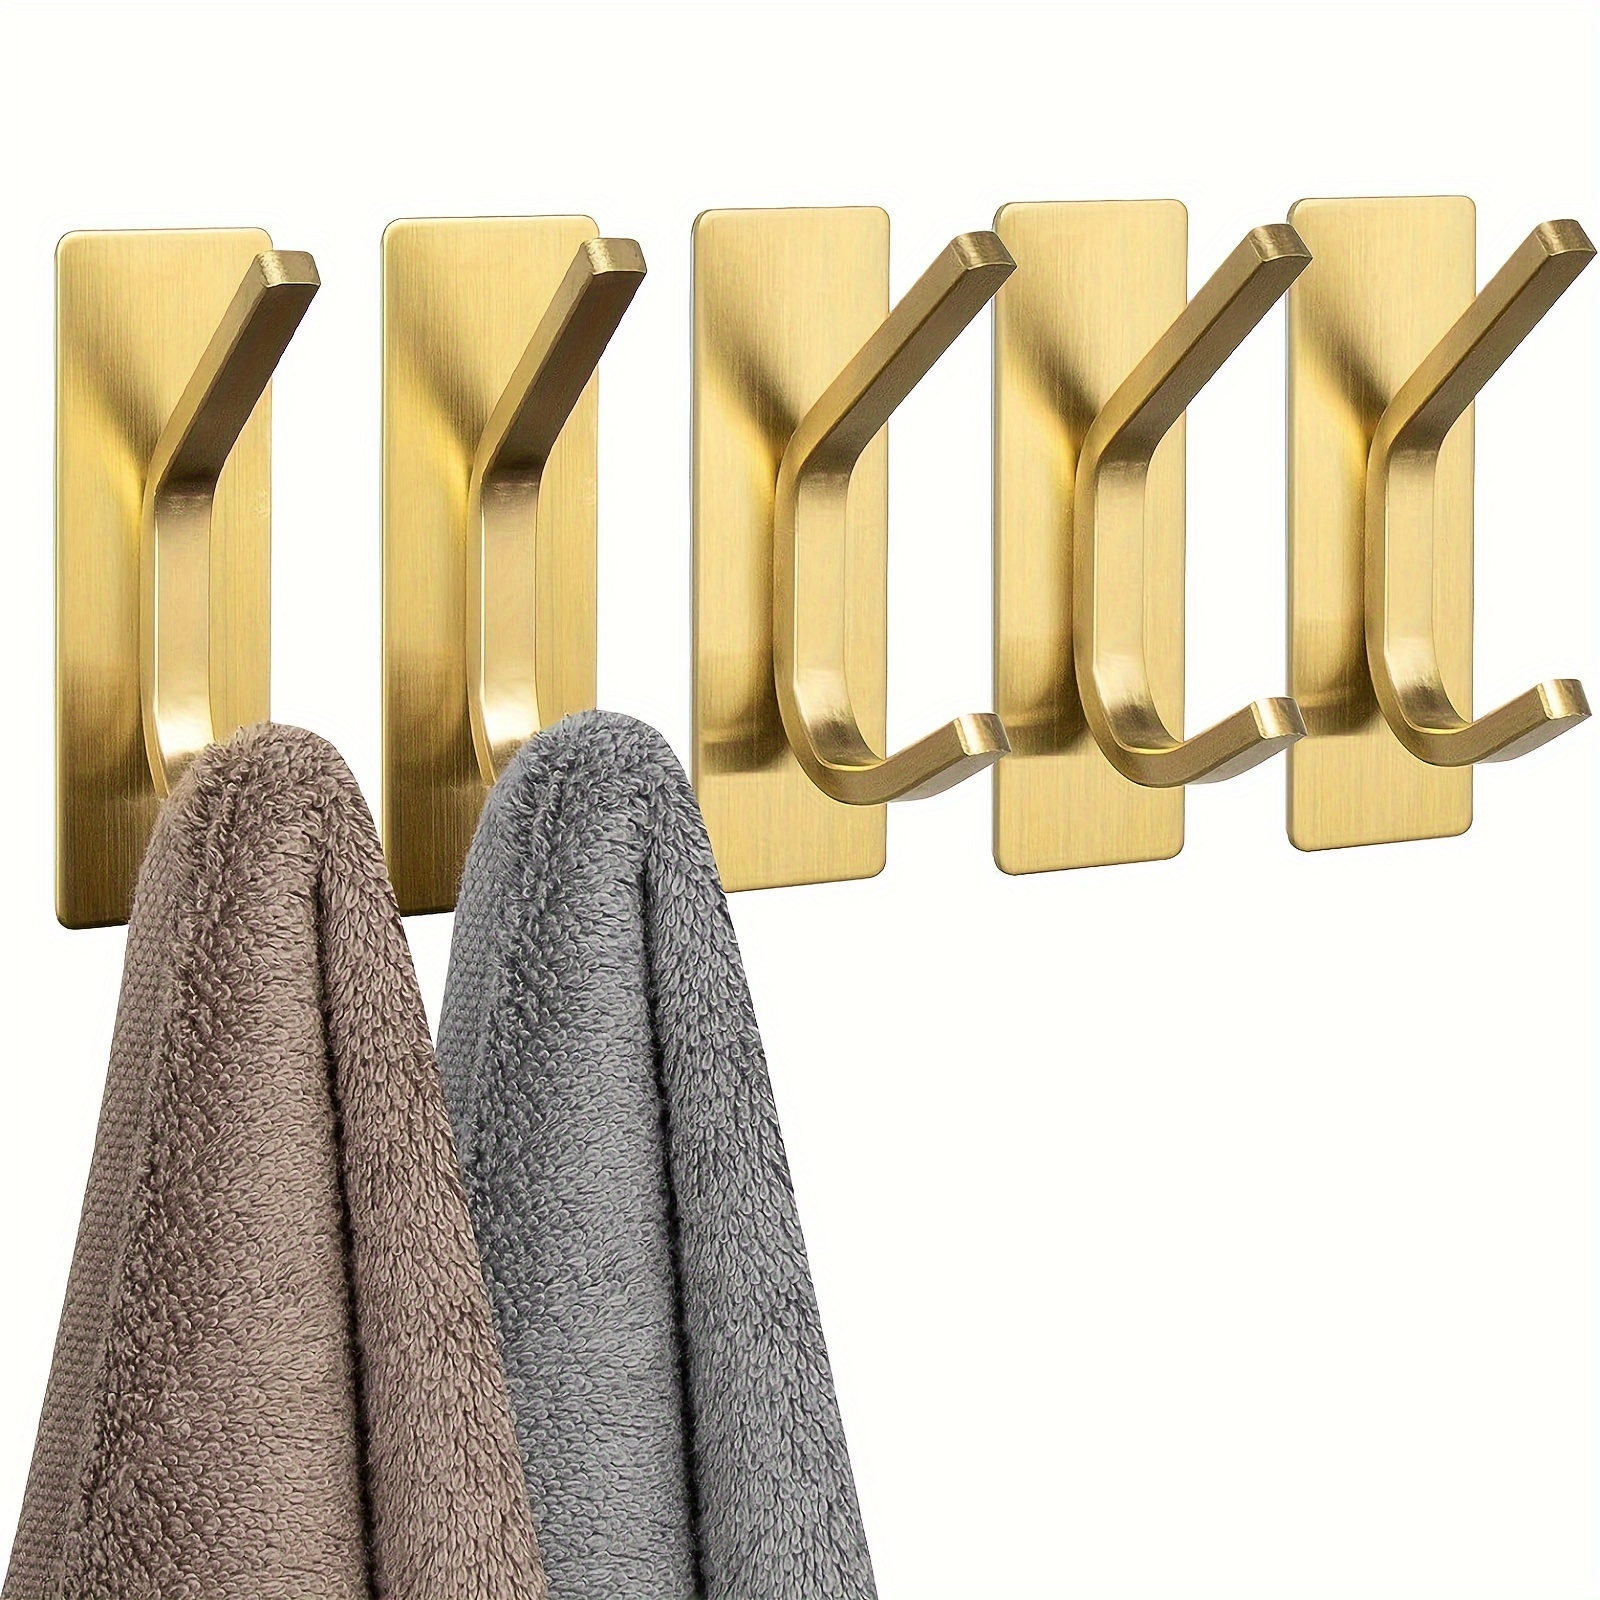 

2pcs Adhesive Hooks - Towel Hook Coat Hooks, Stainless Steel Wall Hooks, For Hanging Bathrobe Sponges In Bathroom And Bedroom, Hook Accessories, Auxiliary Hook, Heavy Duty Hook